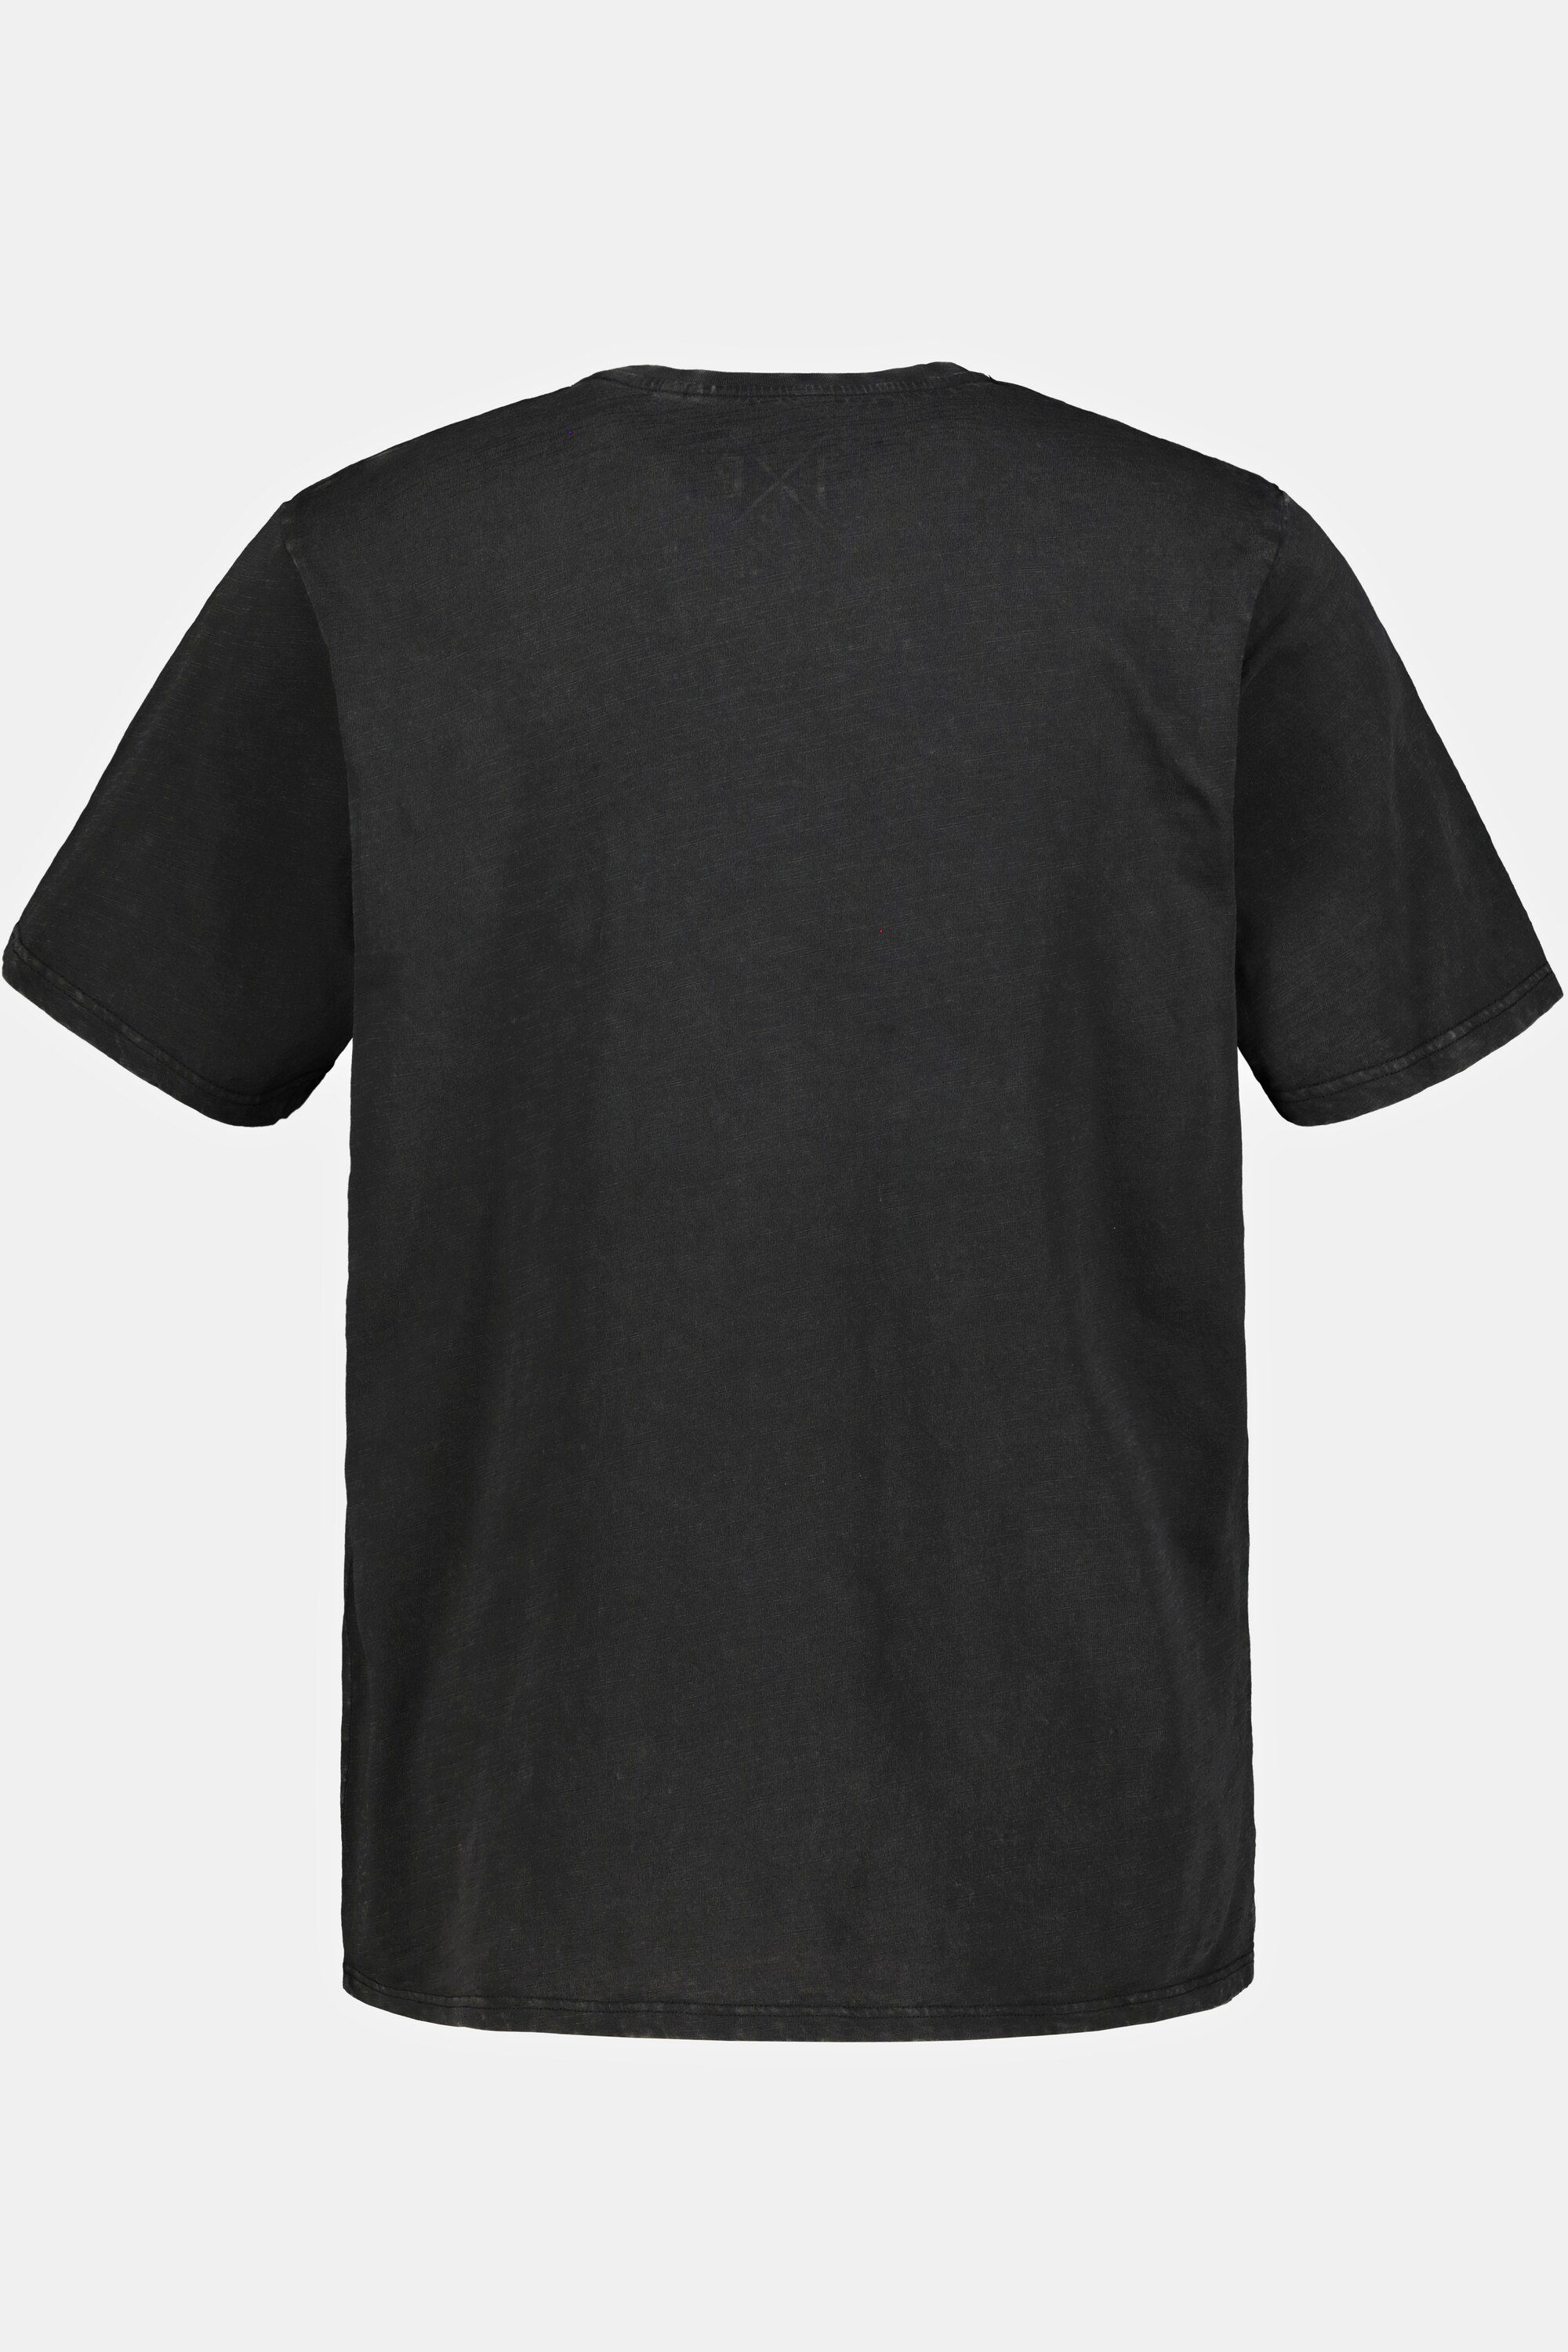 Look JP1880 Flammjersey Halbarm T-Shirt T-Shirt schwarz Vintage